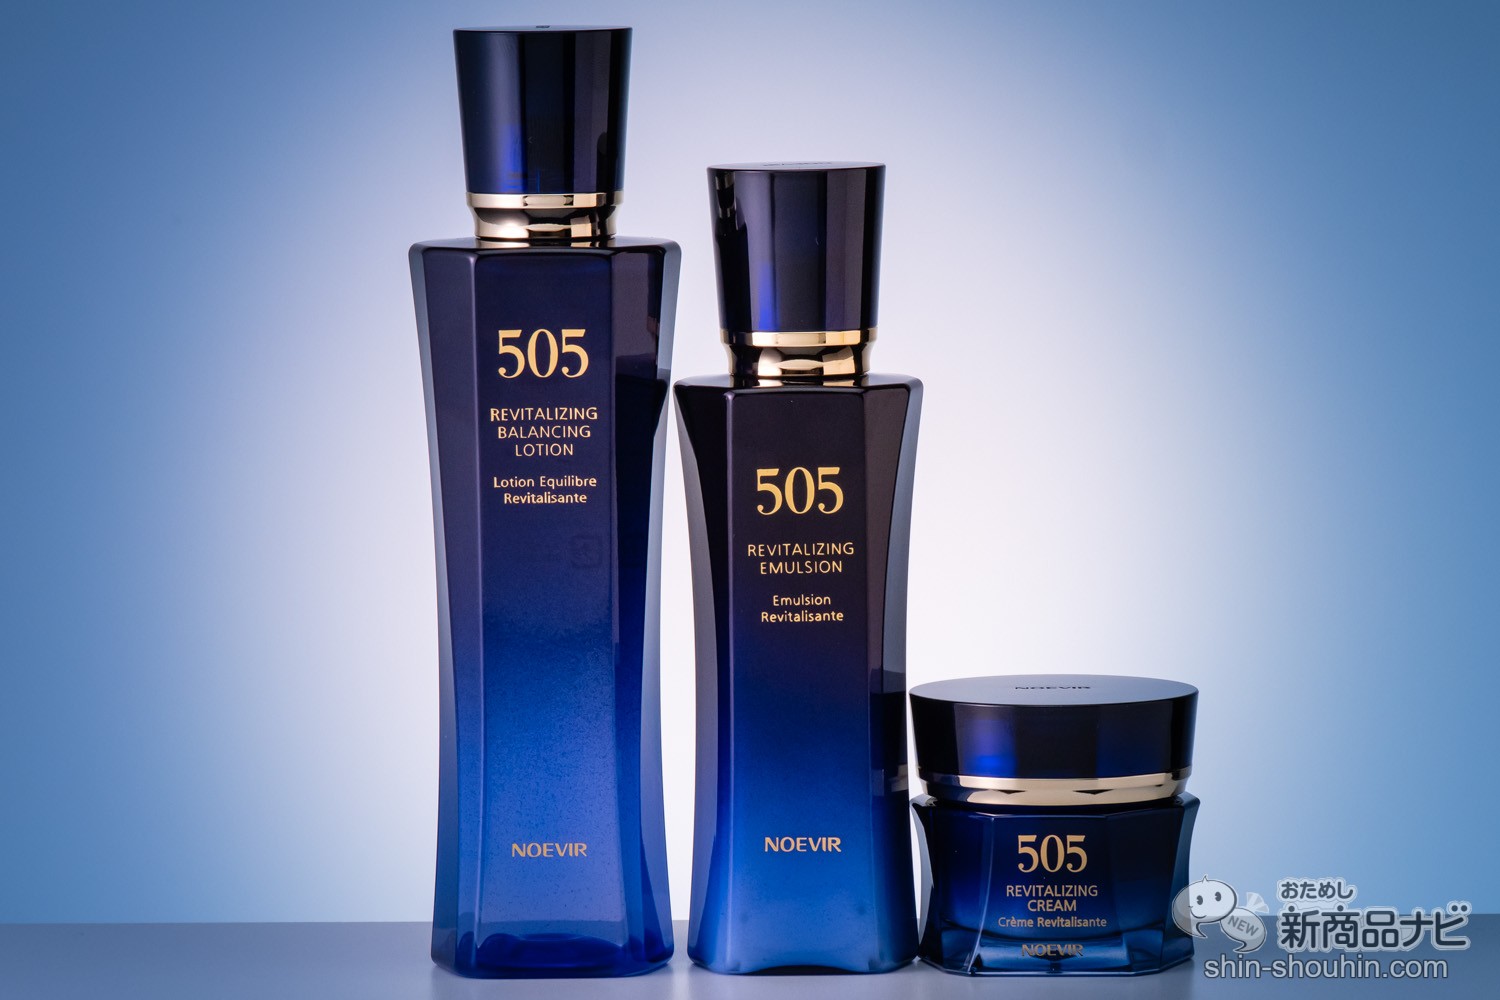 NOEVIR 505 REVITALIZING EMULSIONスキンケア/基礎化粧品 - 化粧水